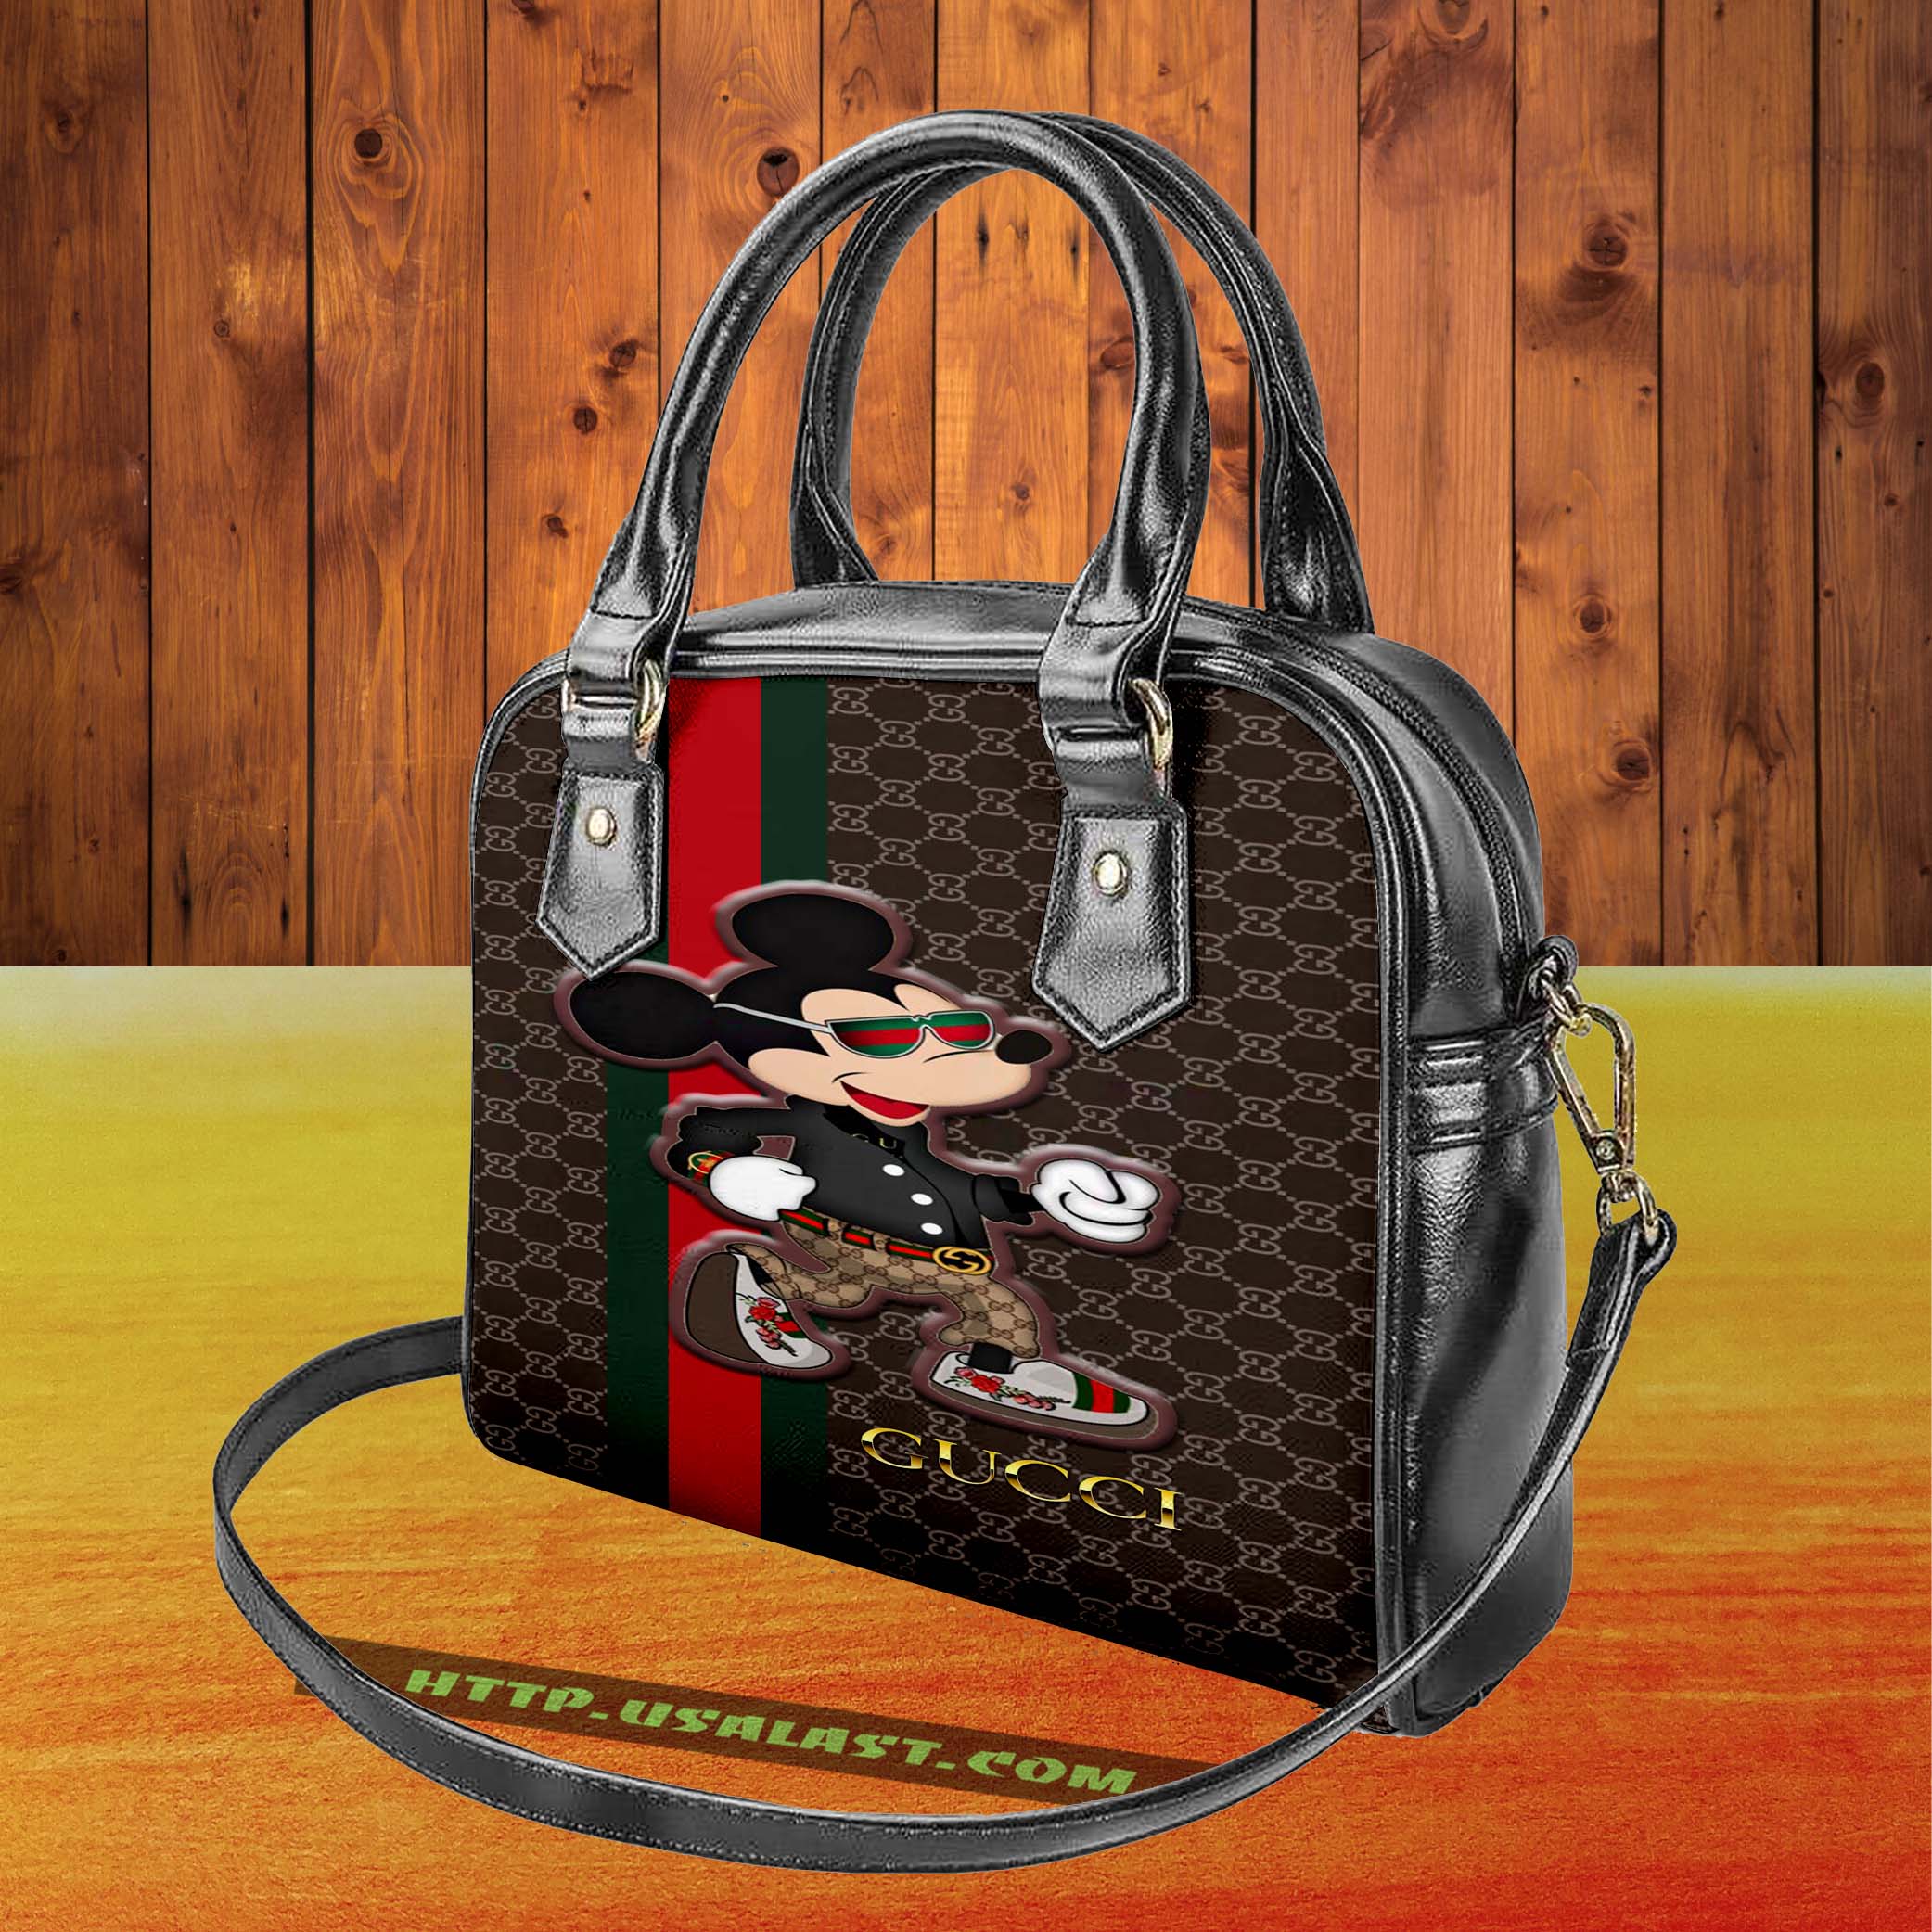 oEGCnesO-T080322-078xxxGucci-Mickey-Mouse-Luxury-Brand-Shoulder-Handbag-V66.jpg